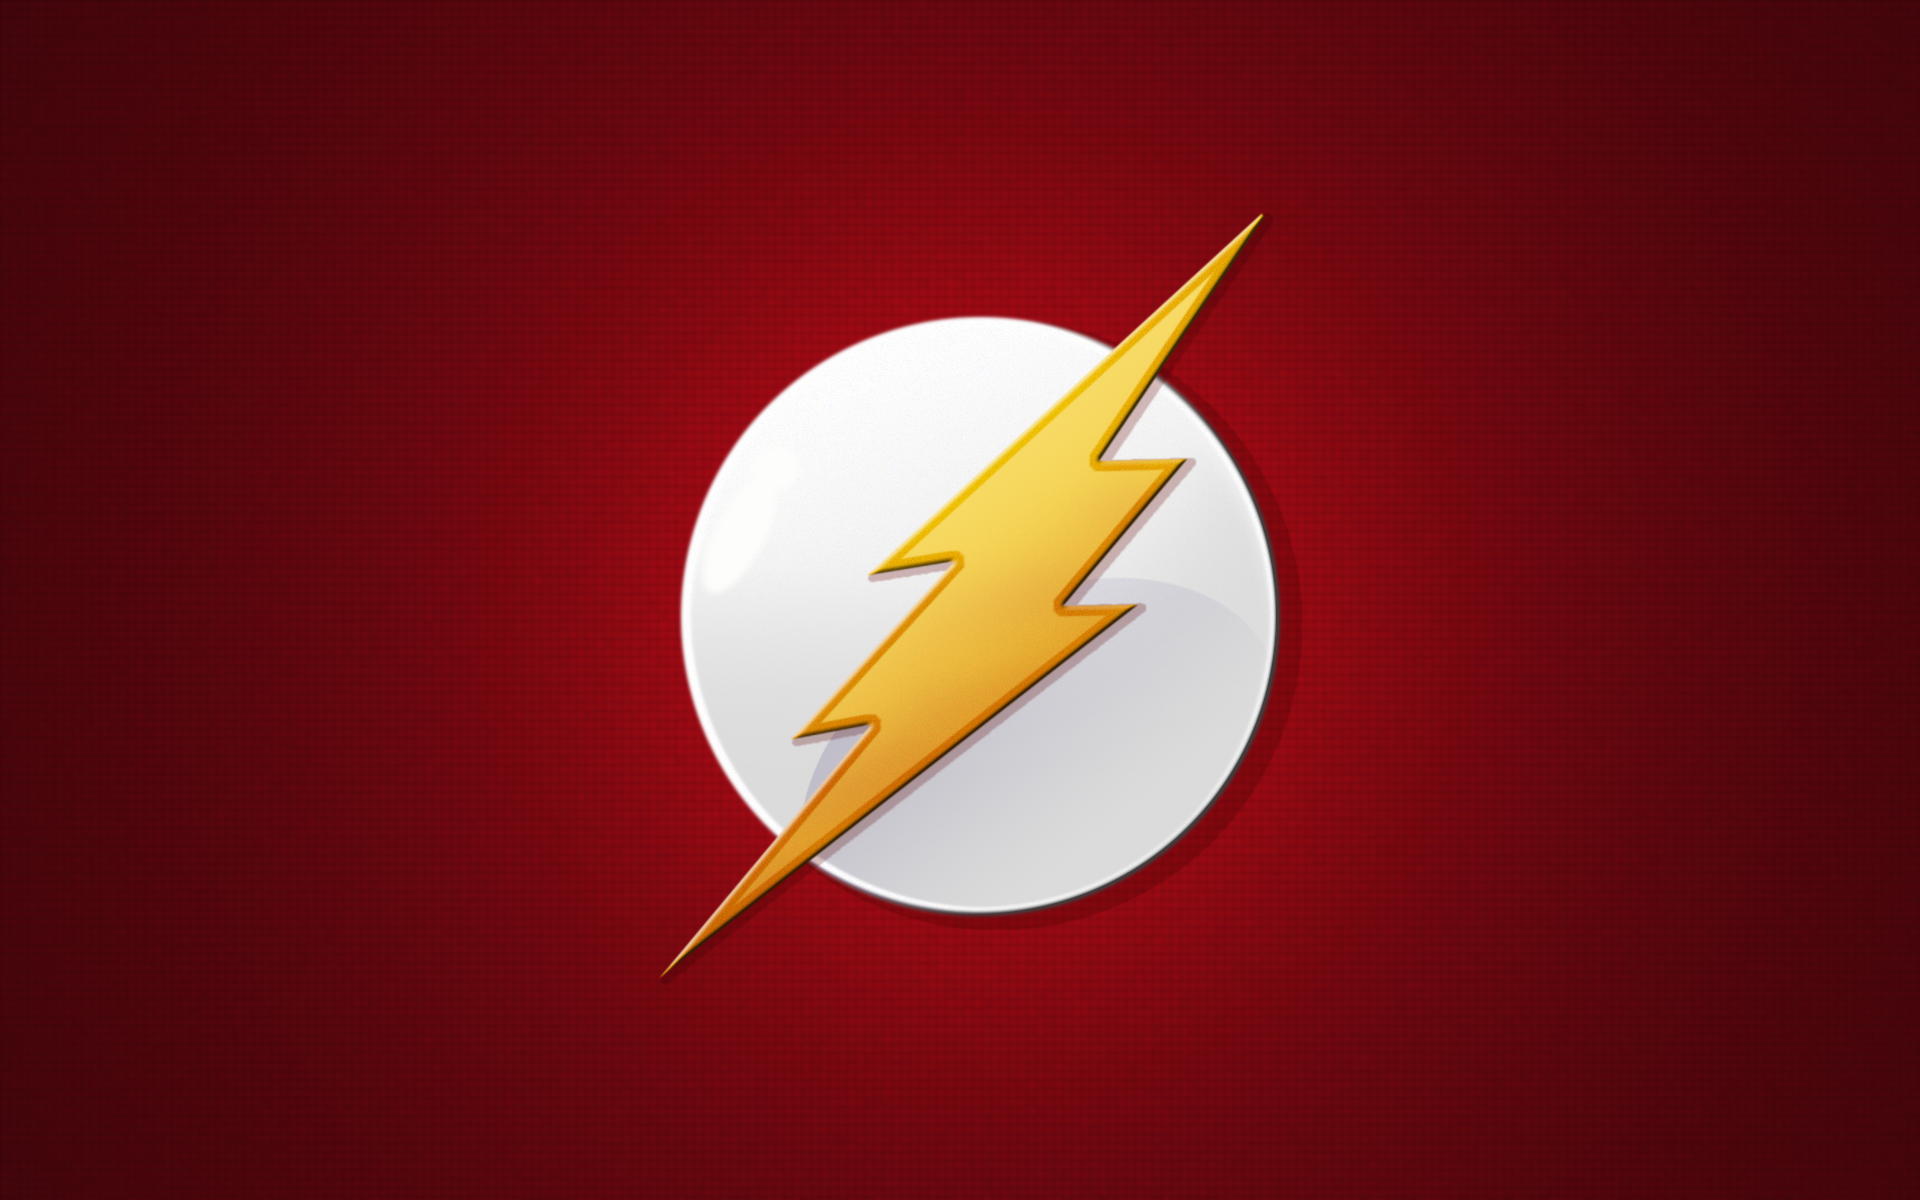 Dc Ics The Flash Logos Ic Hero Wallpaper With